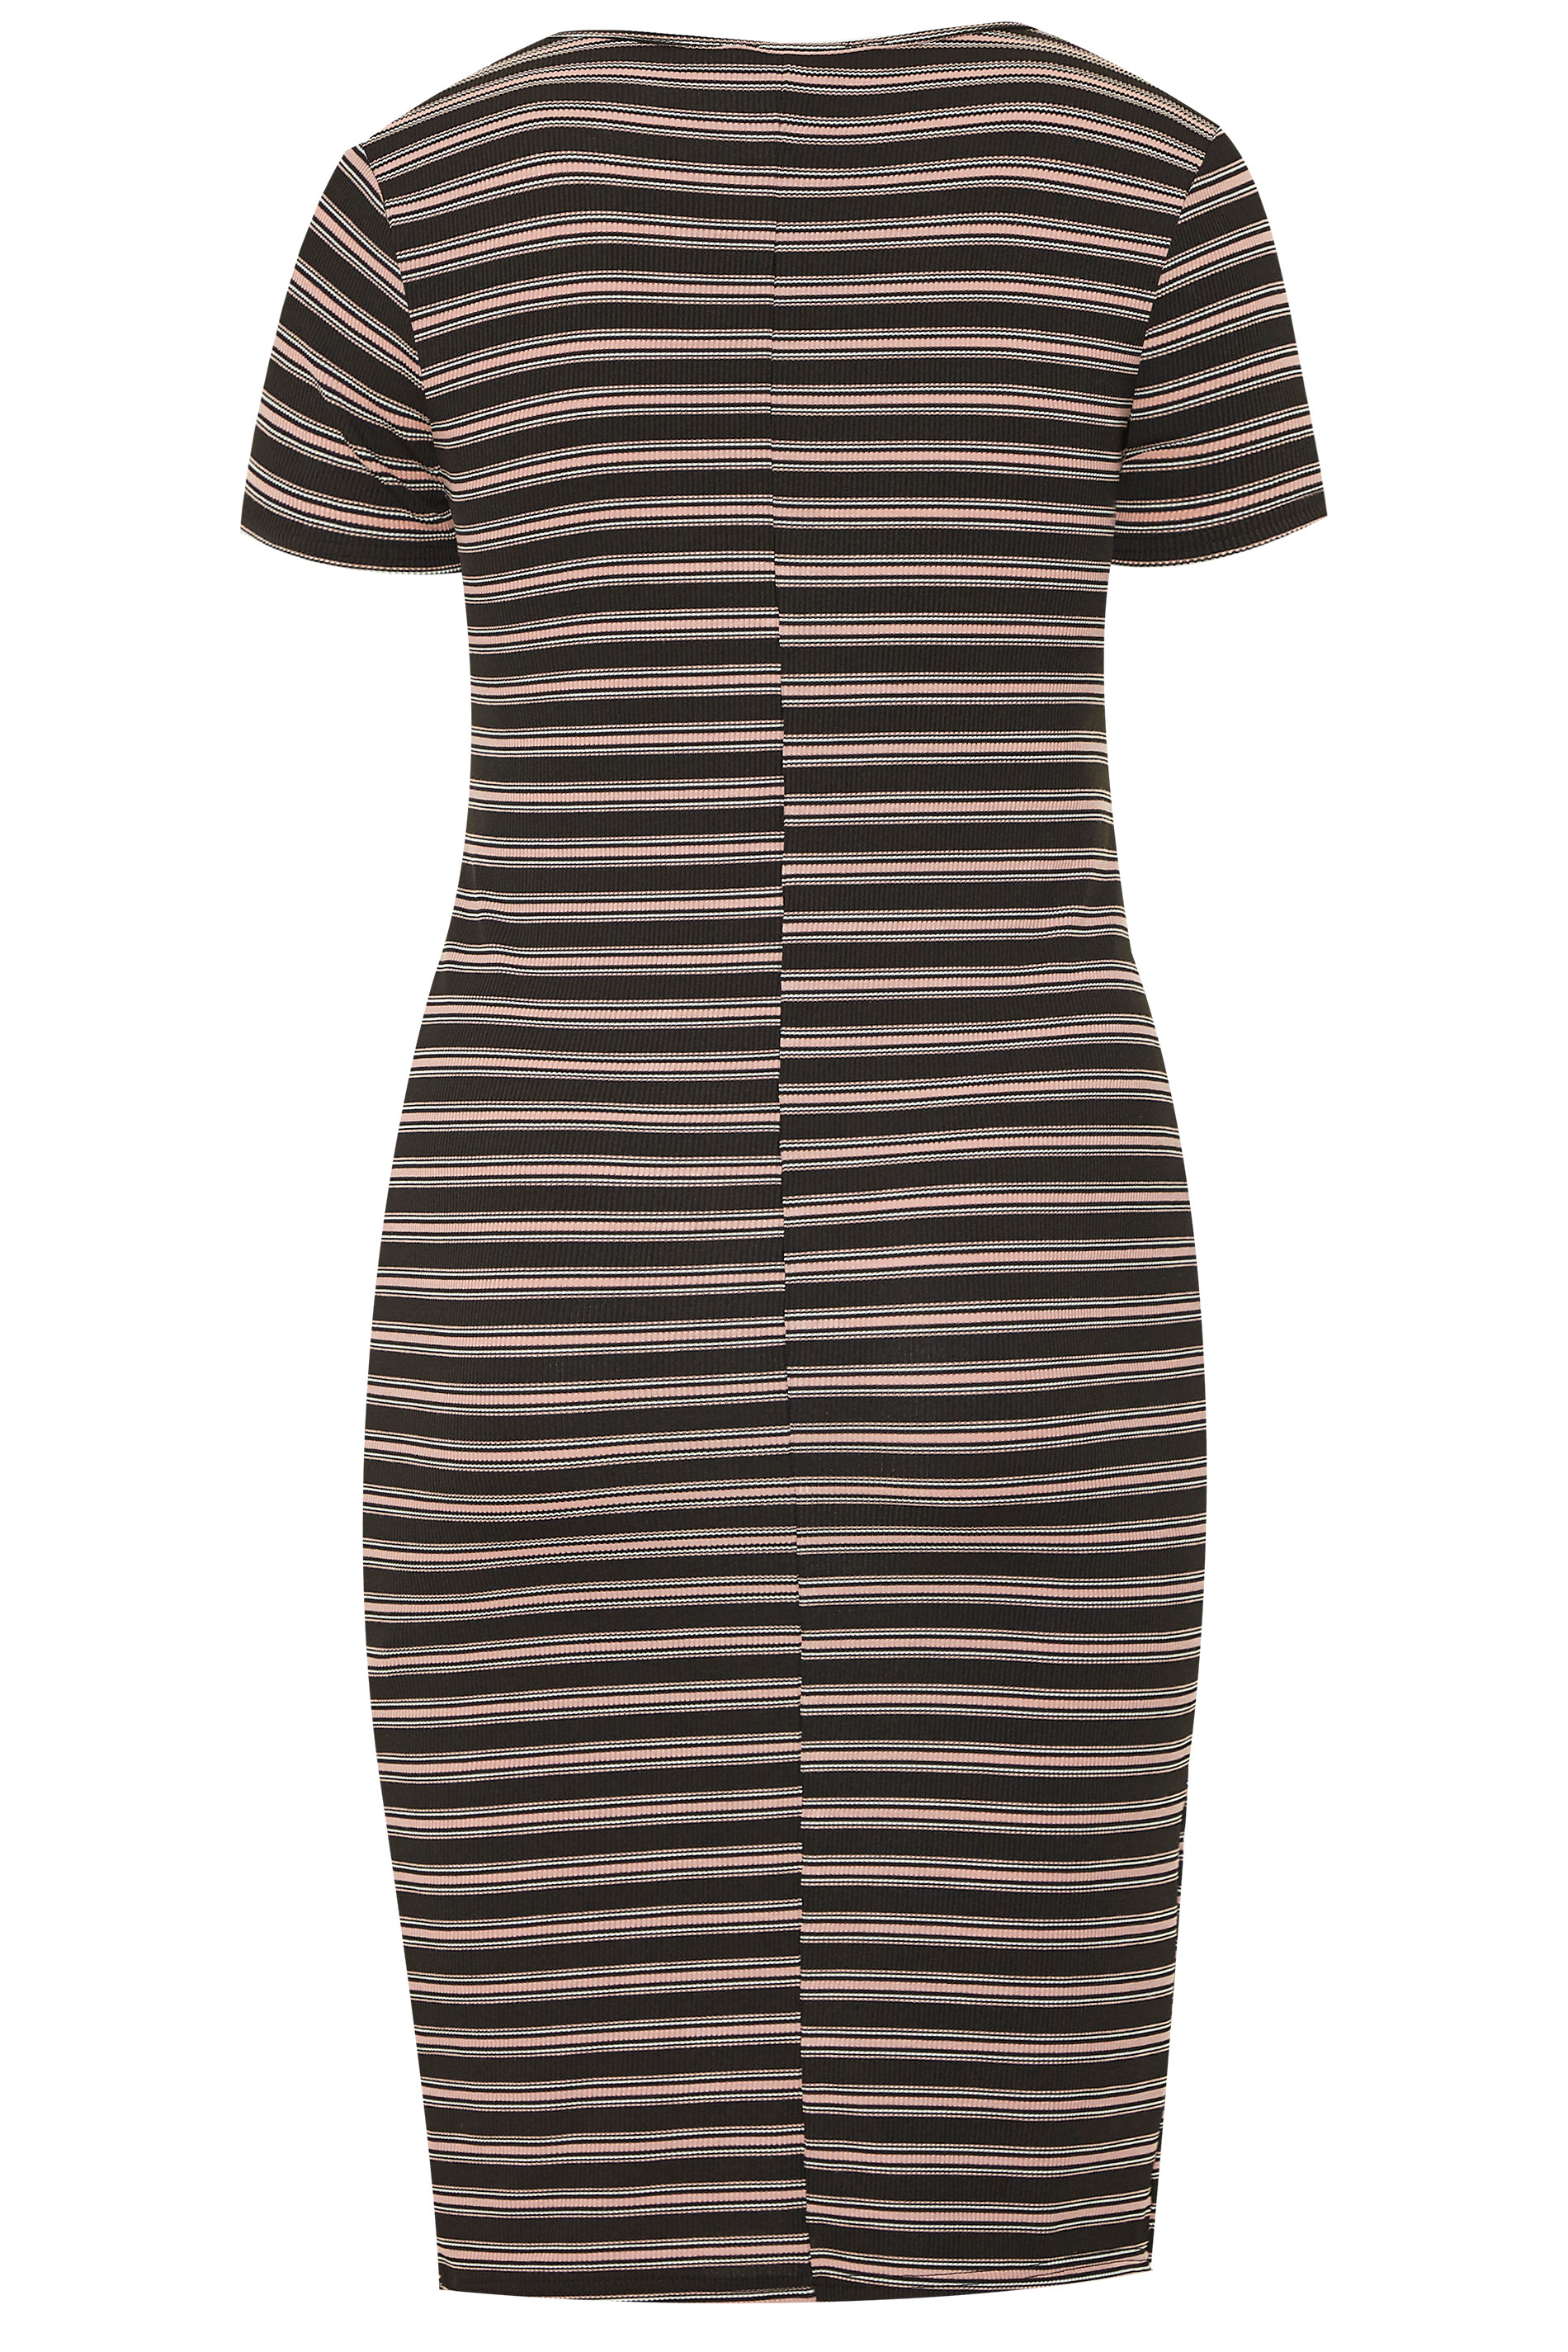 Black & Pink Stripe Ribbed Midi Dress | Yours Clothing